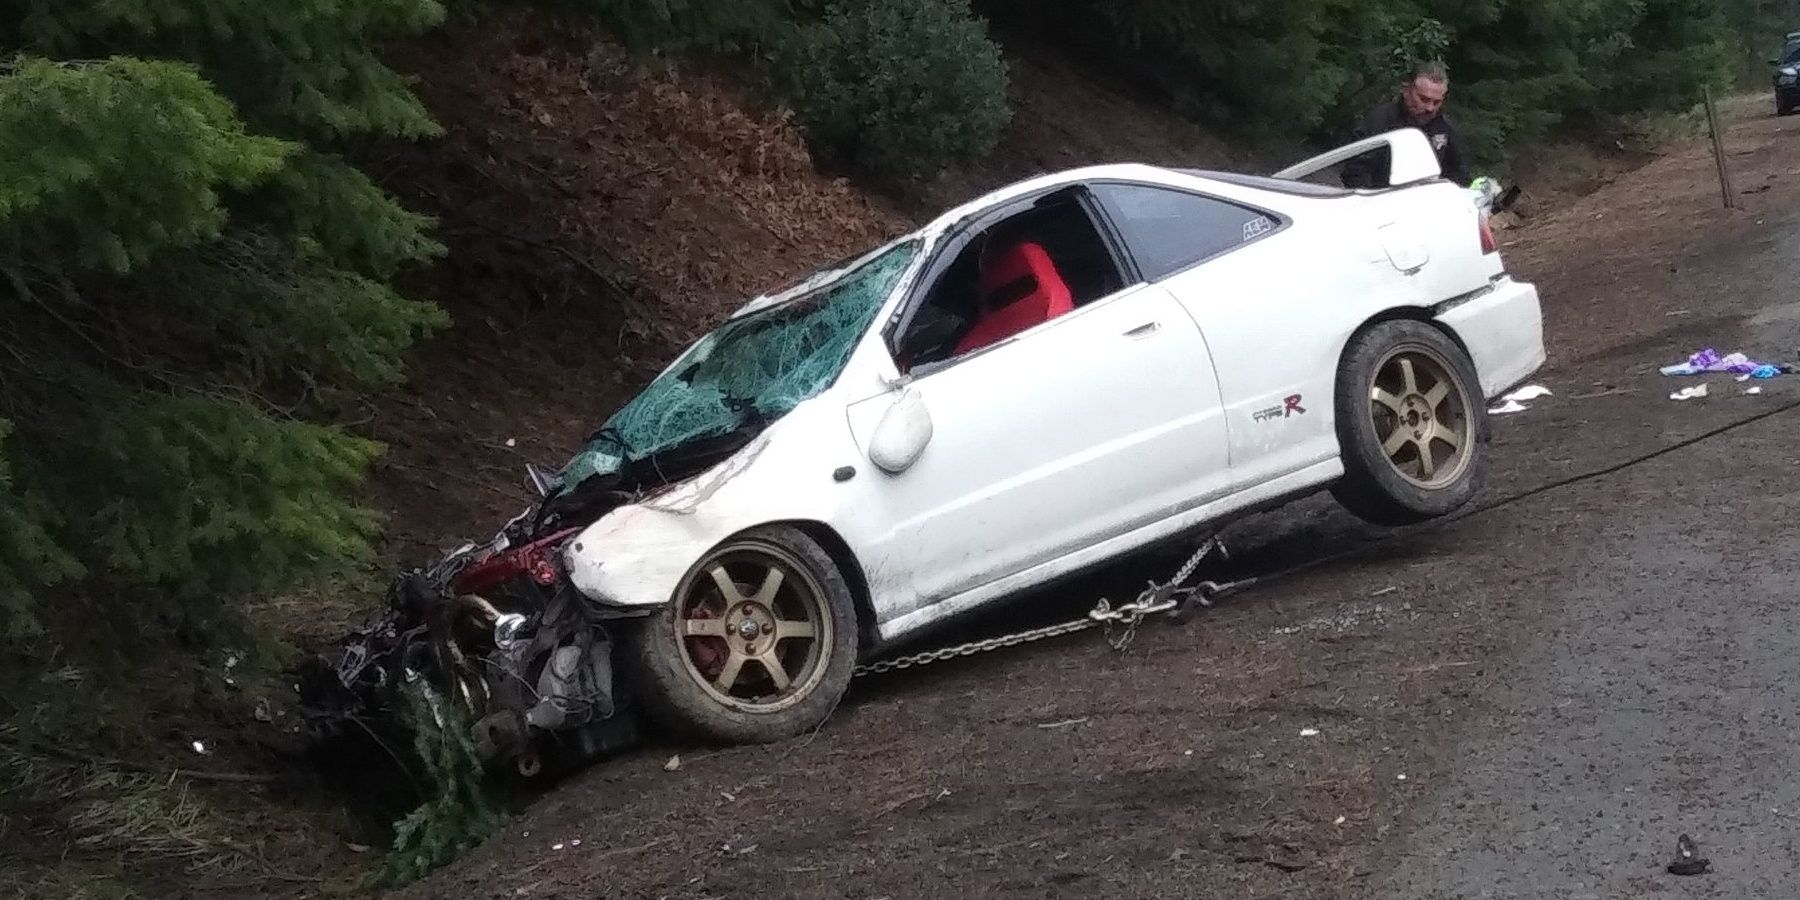 Honda Integra Crashed